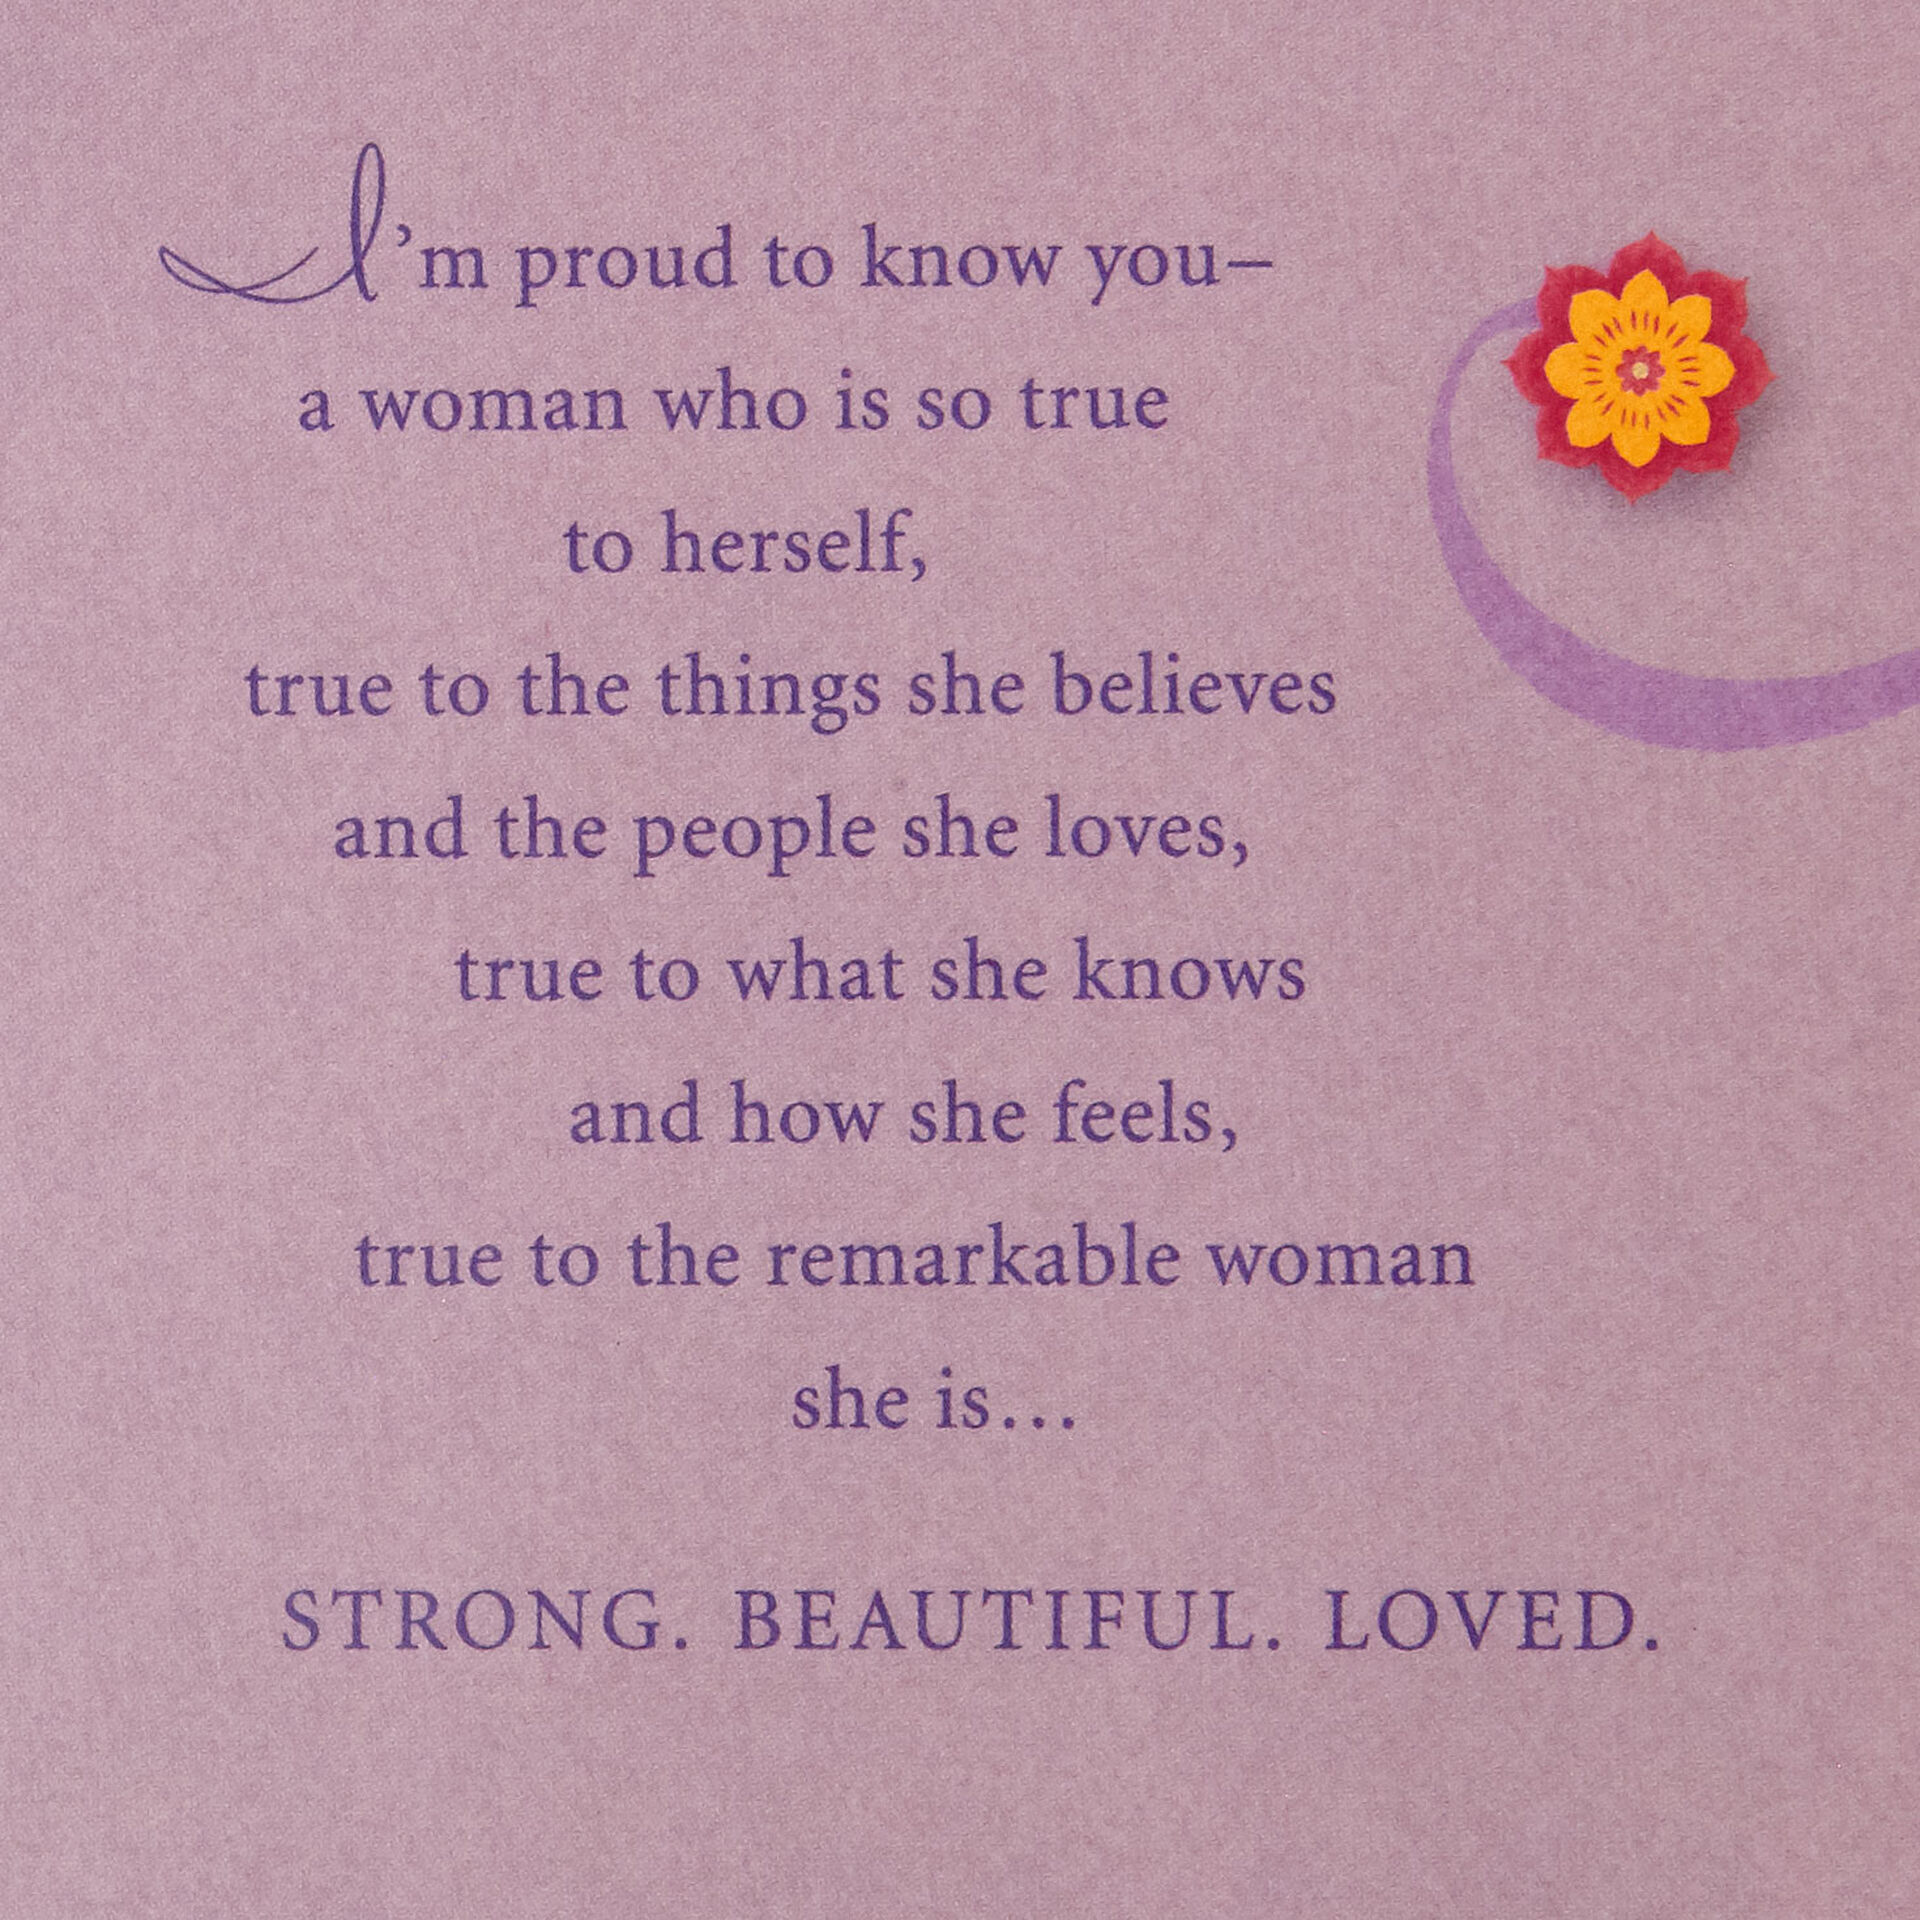 Strong, Beautiful, Loved Woman Birthday Card - Greeting Cards - Hallmark